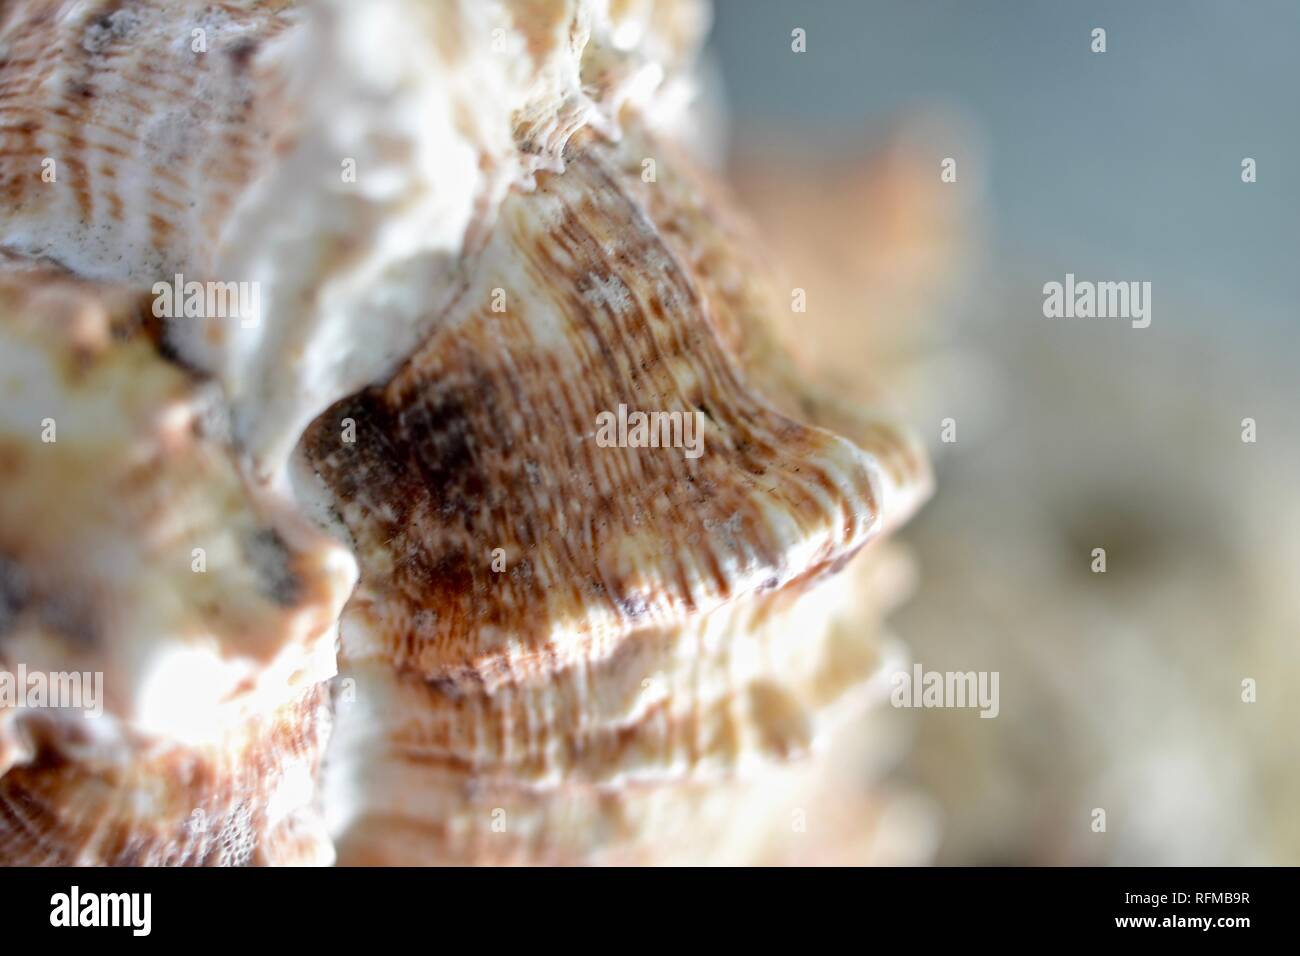 coral, macro, tropical, shell, reef, sea, object, marine, design, texture, close-up, exotic, decoration, island, aquatic, dried, organism, seashell Stock Photo